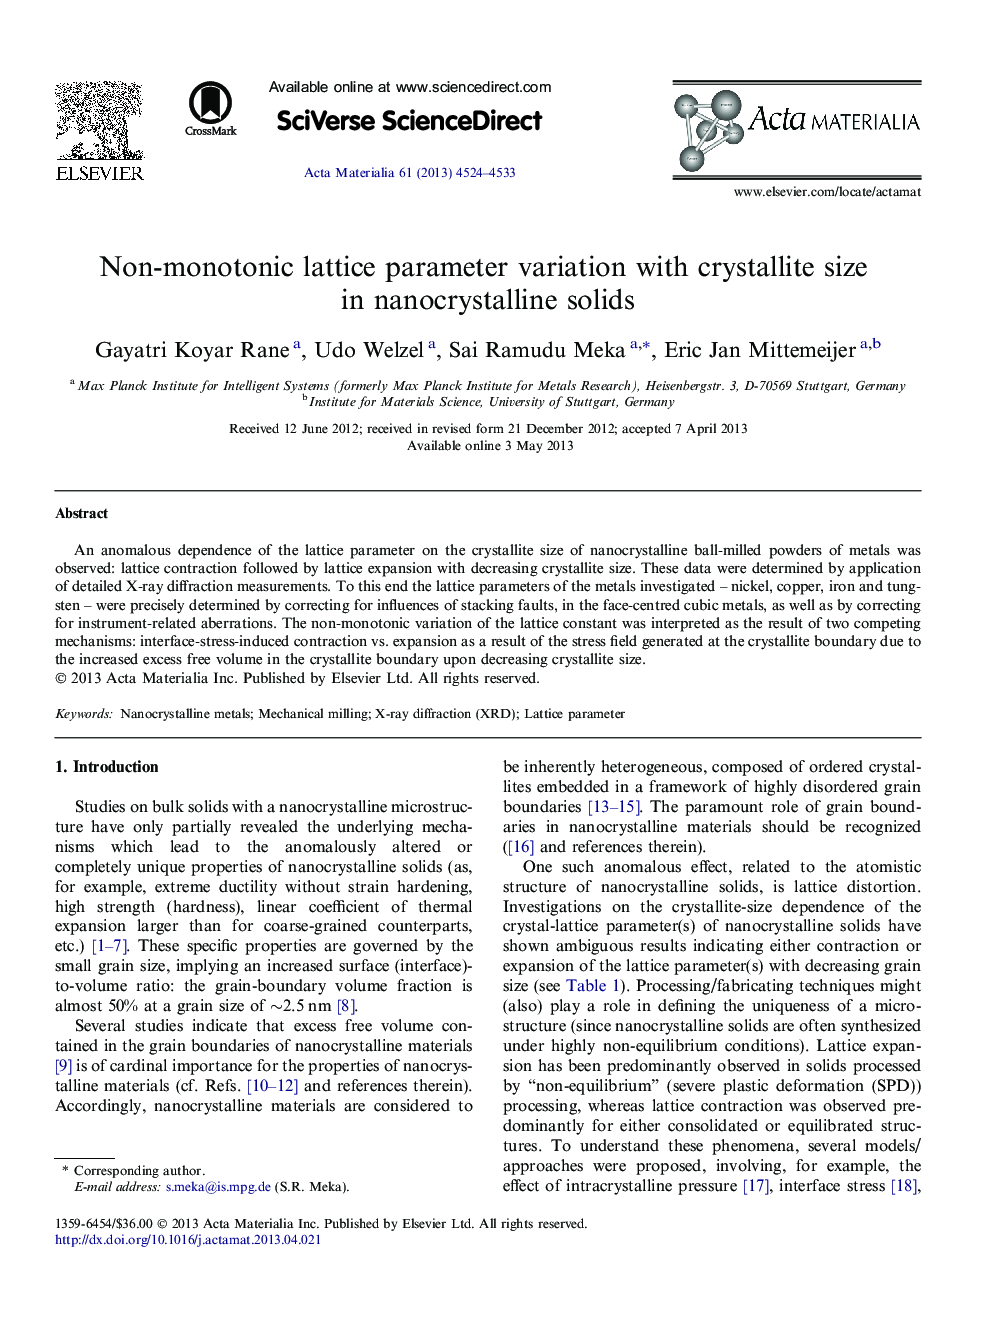 Non-monotonic lattice parameter variation with crystallite size in nanocrystalline solids